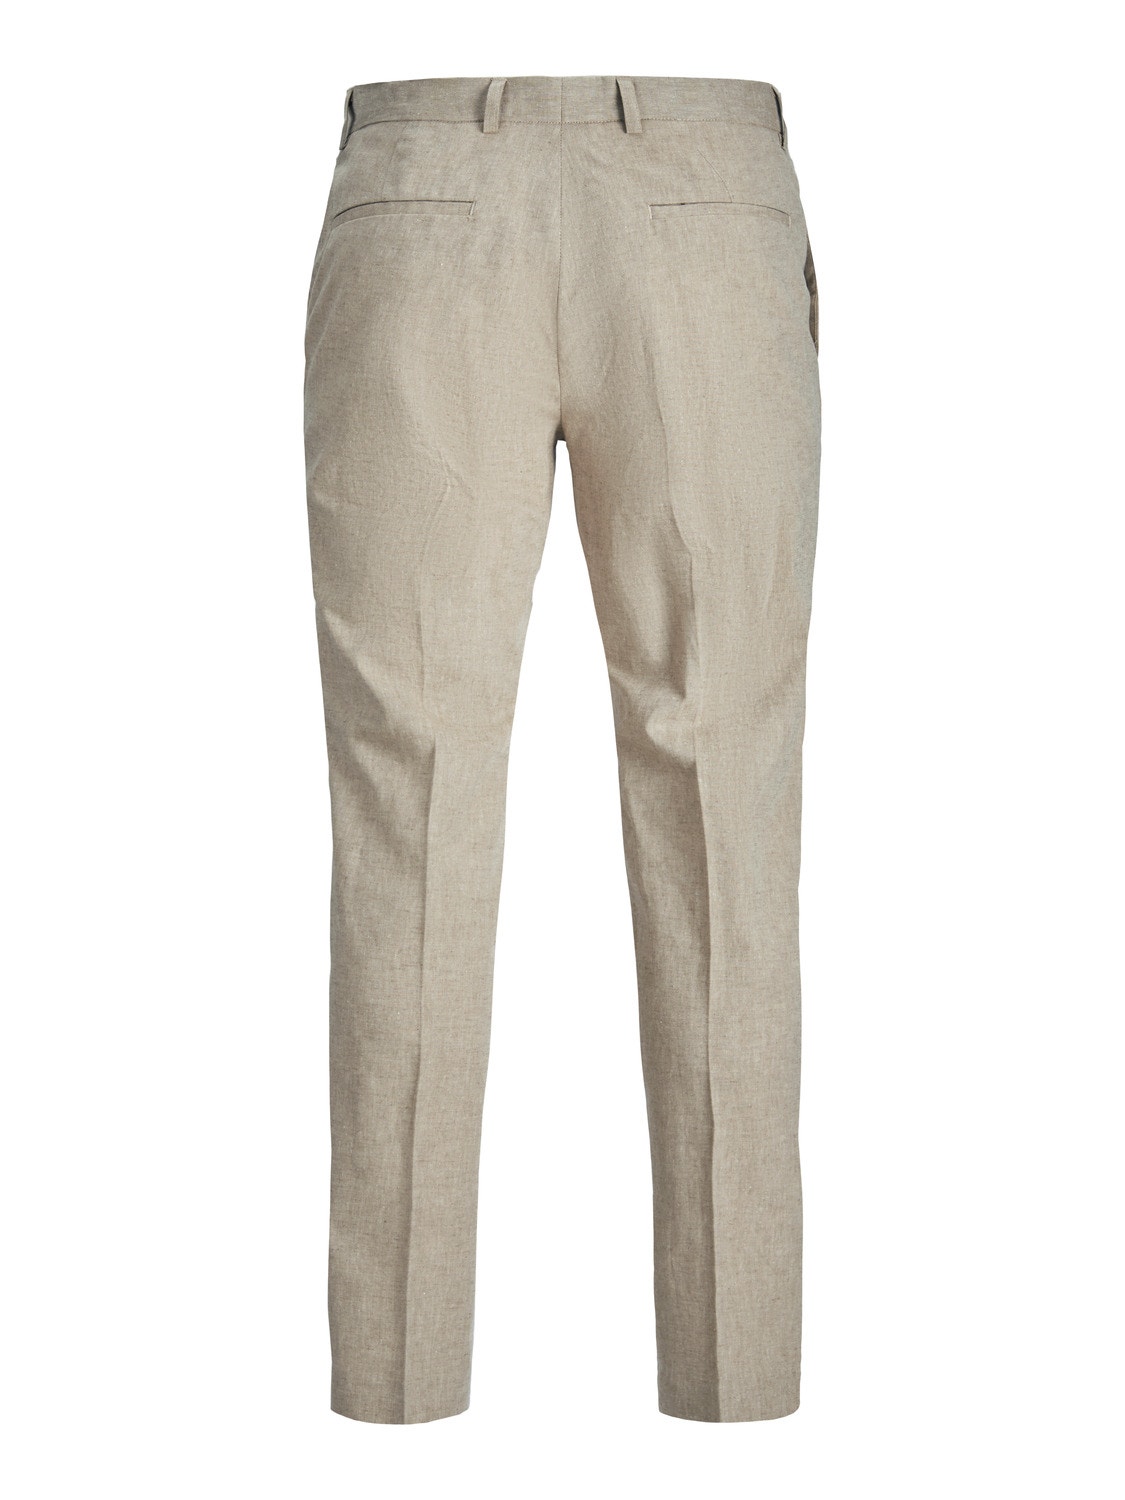 Dickins & Jones Women's Beige/Khaki Cotton Stretch Pants Trousers